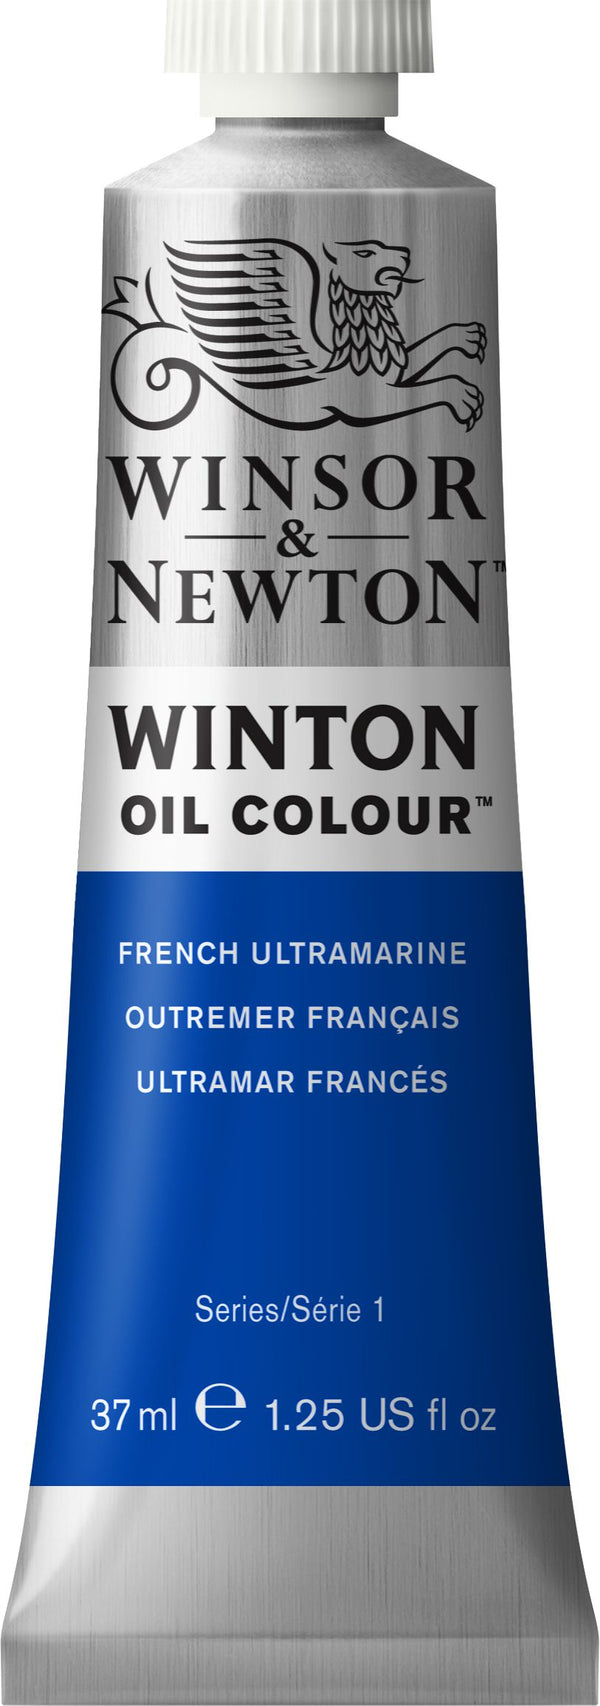 Winton Oil Colour French Ultramarine - 37ml tube